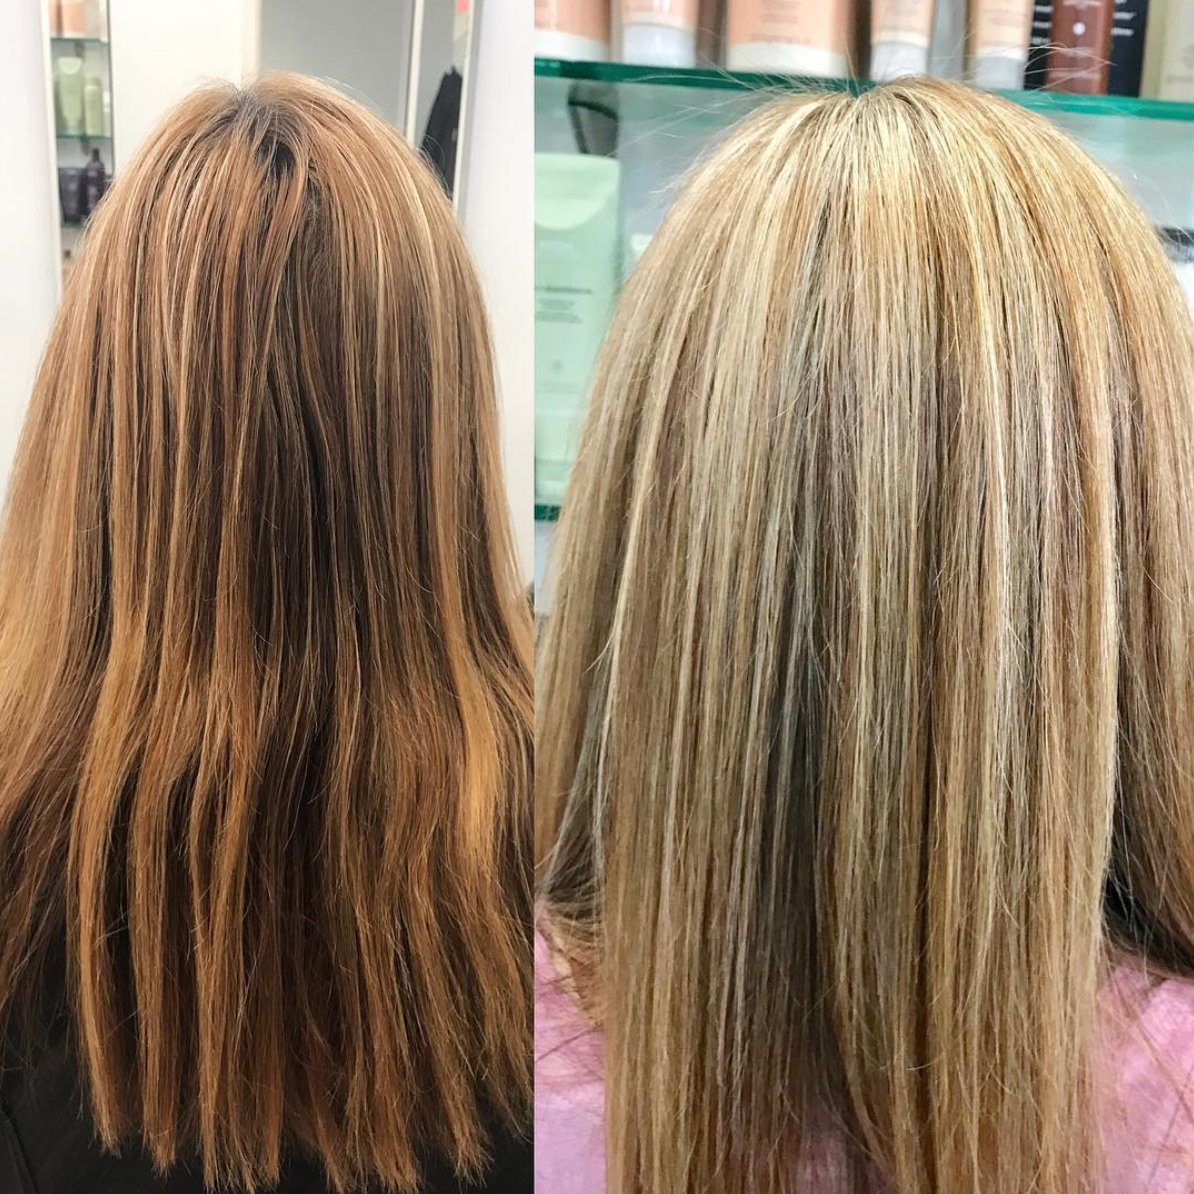 Before & After by Kait. Love this transformation! #beforeandafter #aveda #avedacolor #avedablonde #avedastylist #avedahair #enlightner #enlightnerblonding #blonde #blondehair #blondehighlights #alexandriava #oldtownalexandria #bazzak #bazzaksalon